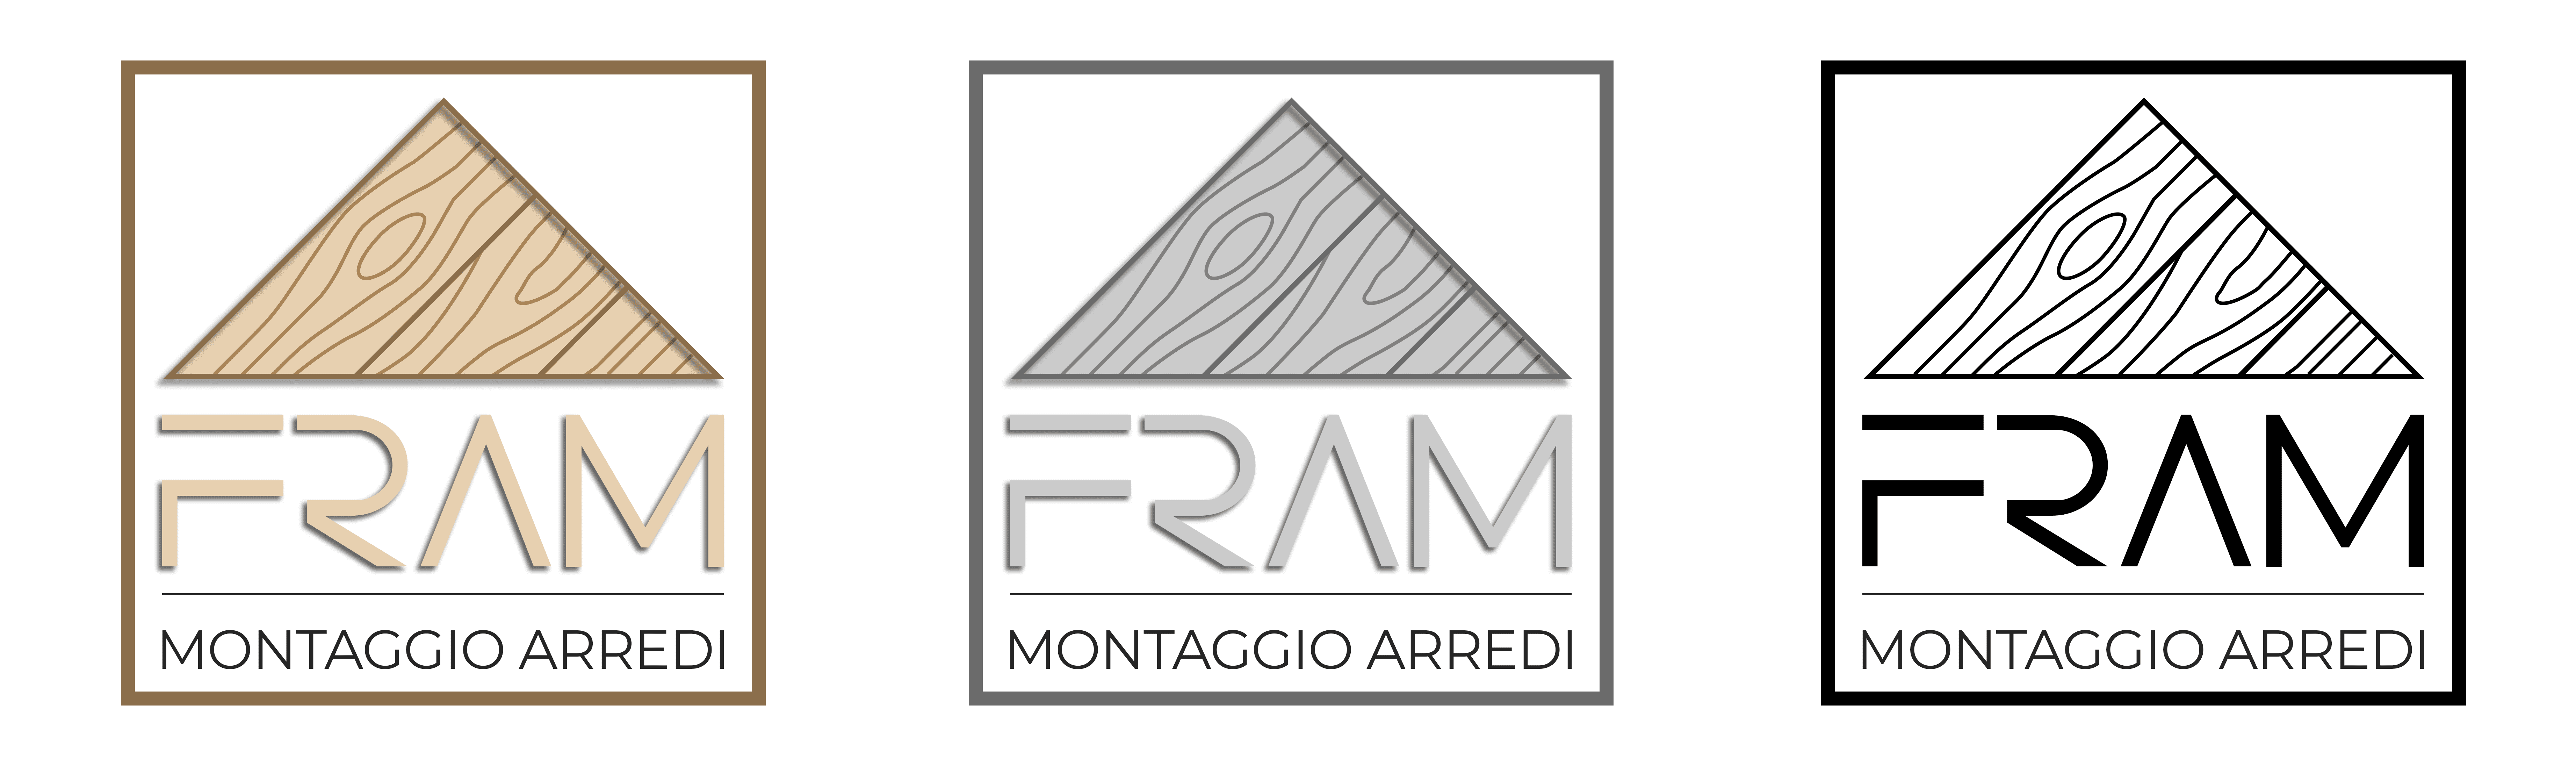 Restyling-logo-Fram4-smart